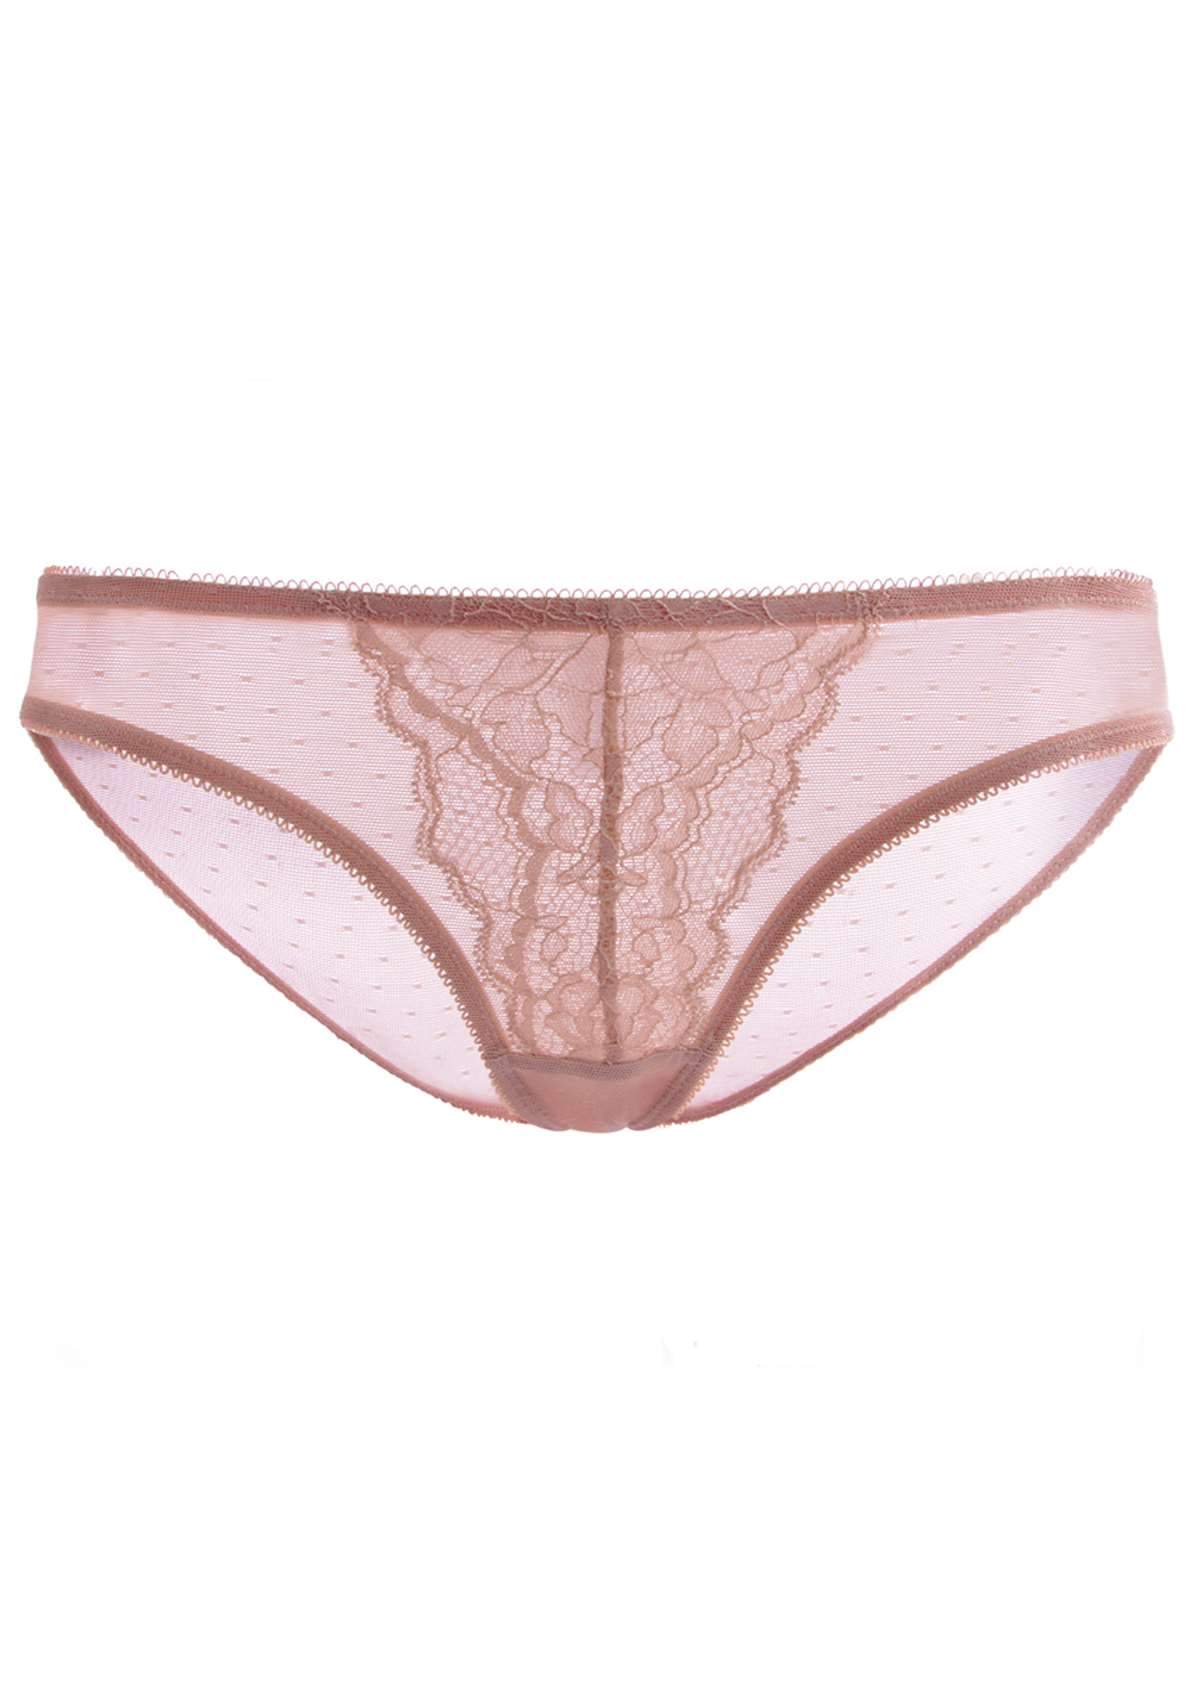 HSIA Enchante Sheer Lace Mesh Mid Rise Bikini Underwear - L / Dark Pink